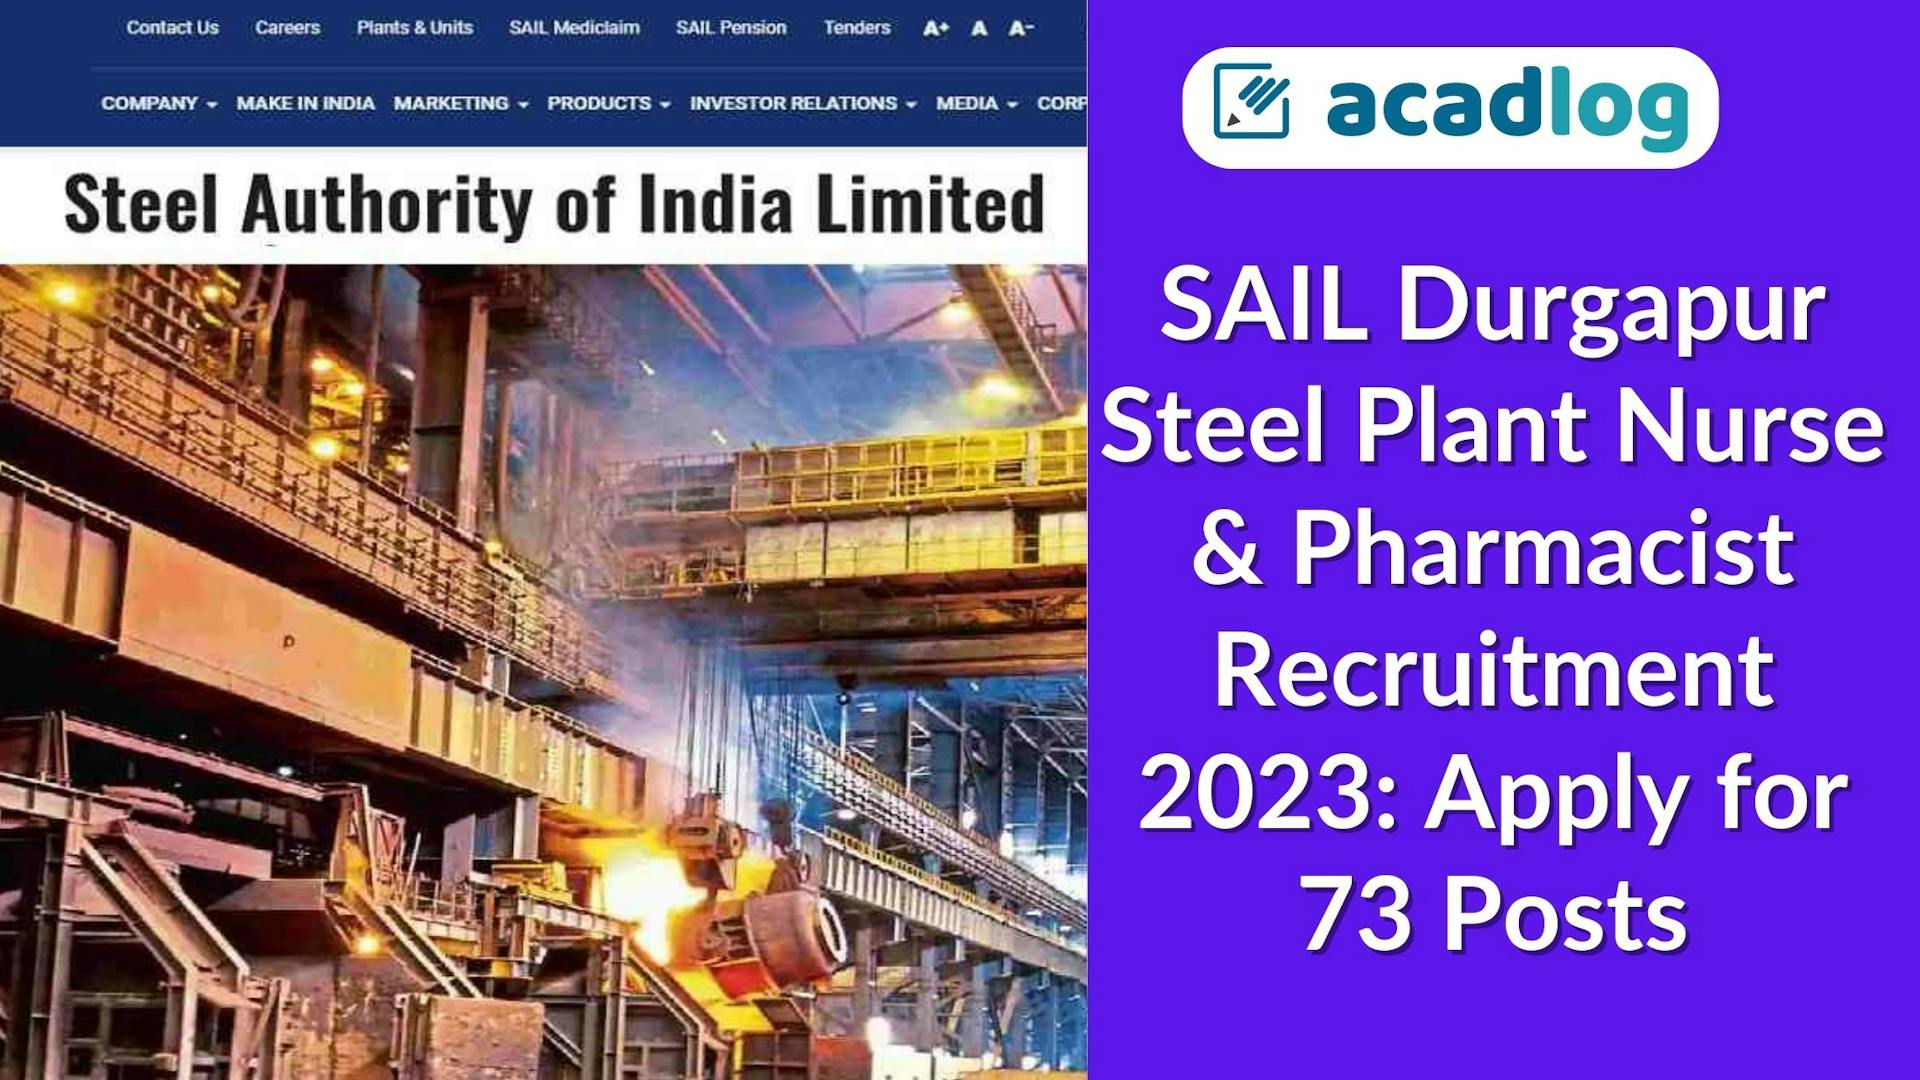 SAIL Durgapur Steel Plant Nurse & Pharmacist Recruitment 2023: Apply for 73 Posts